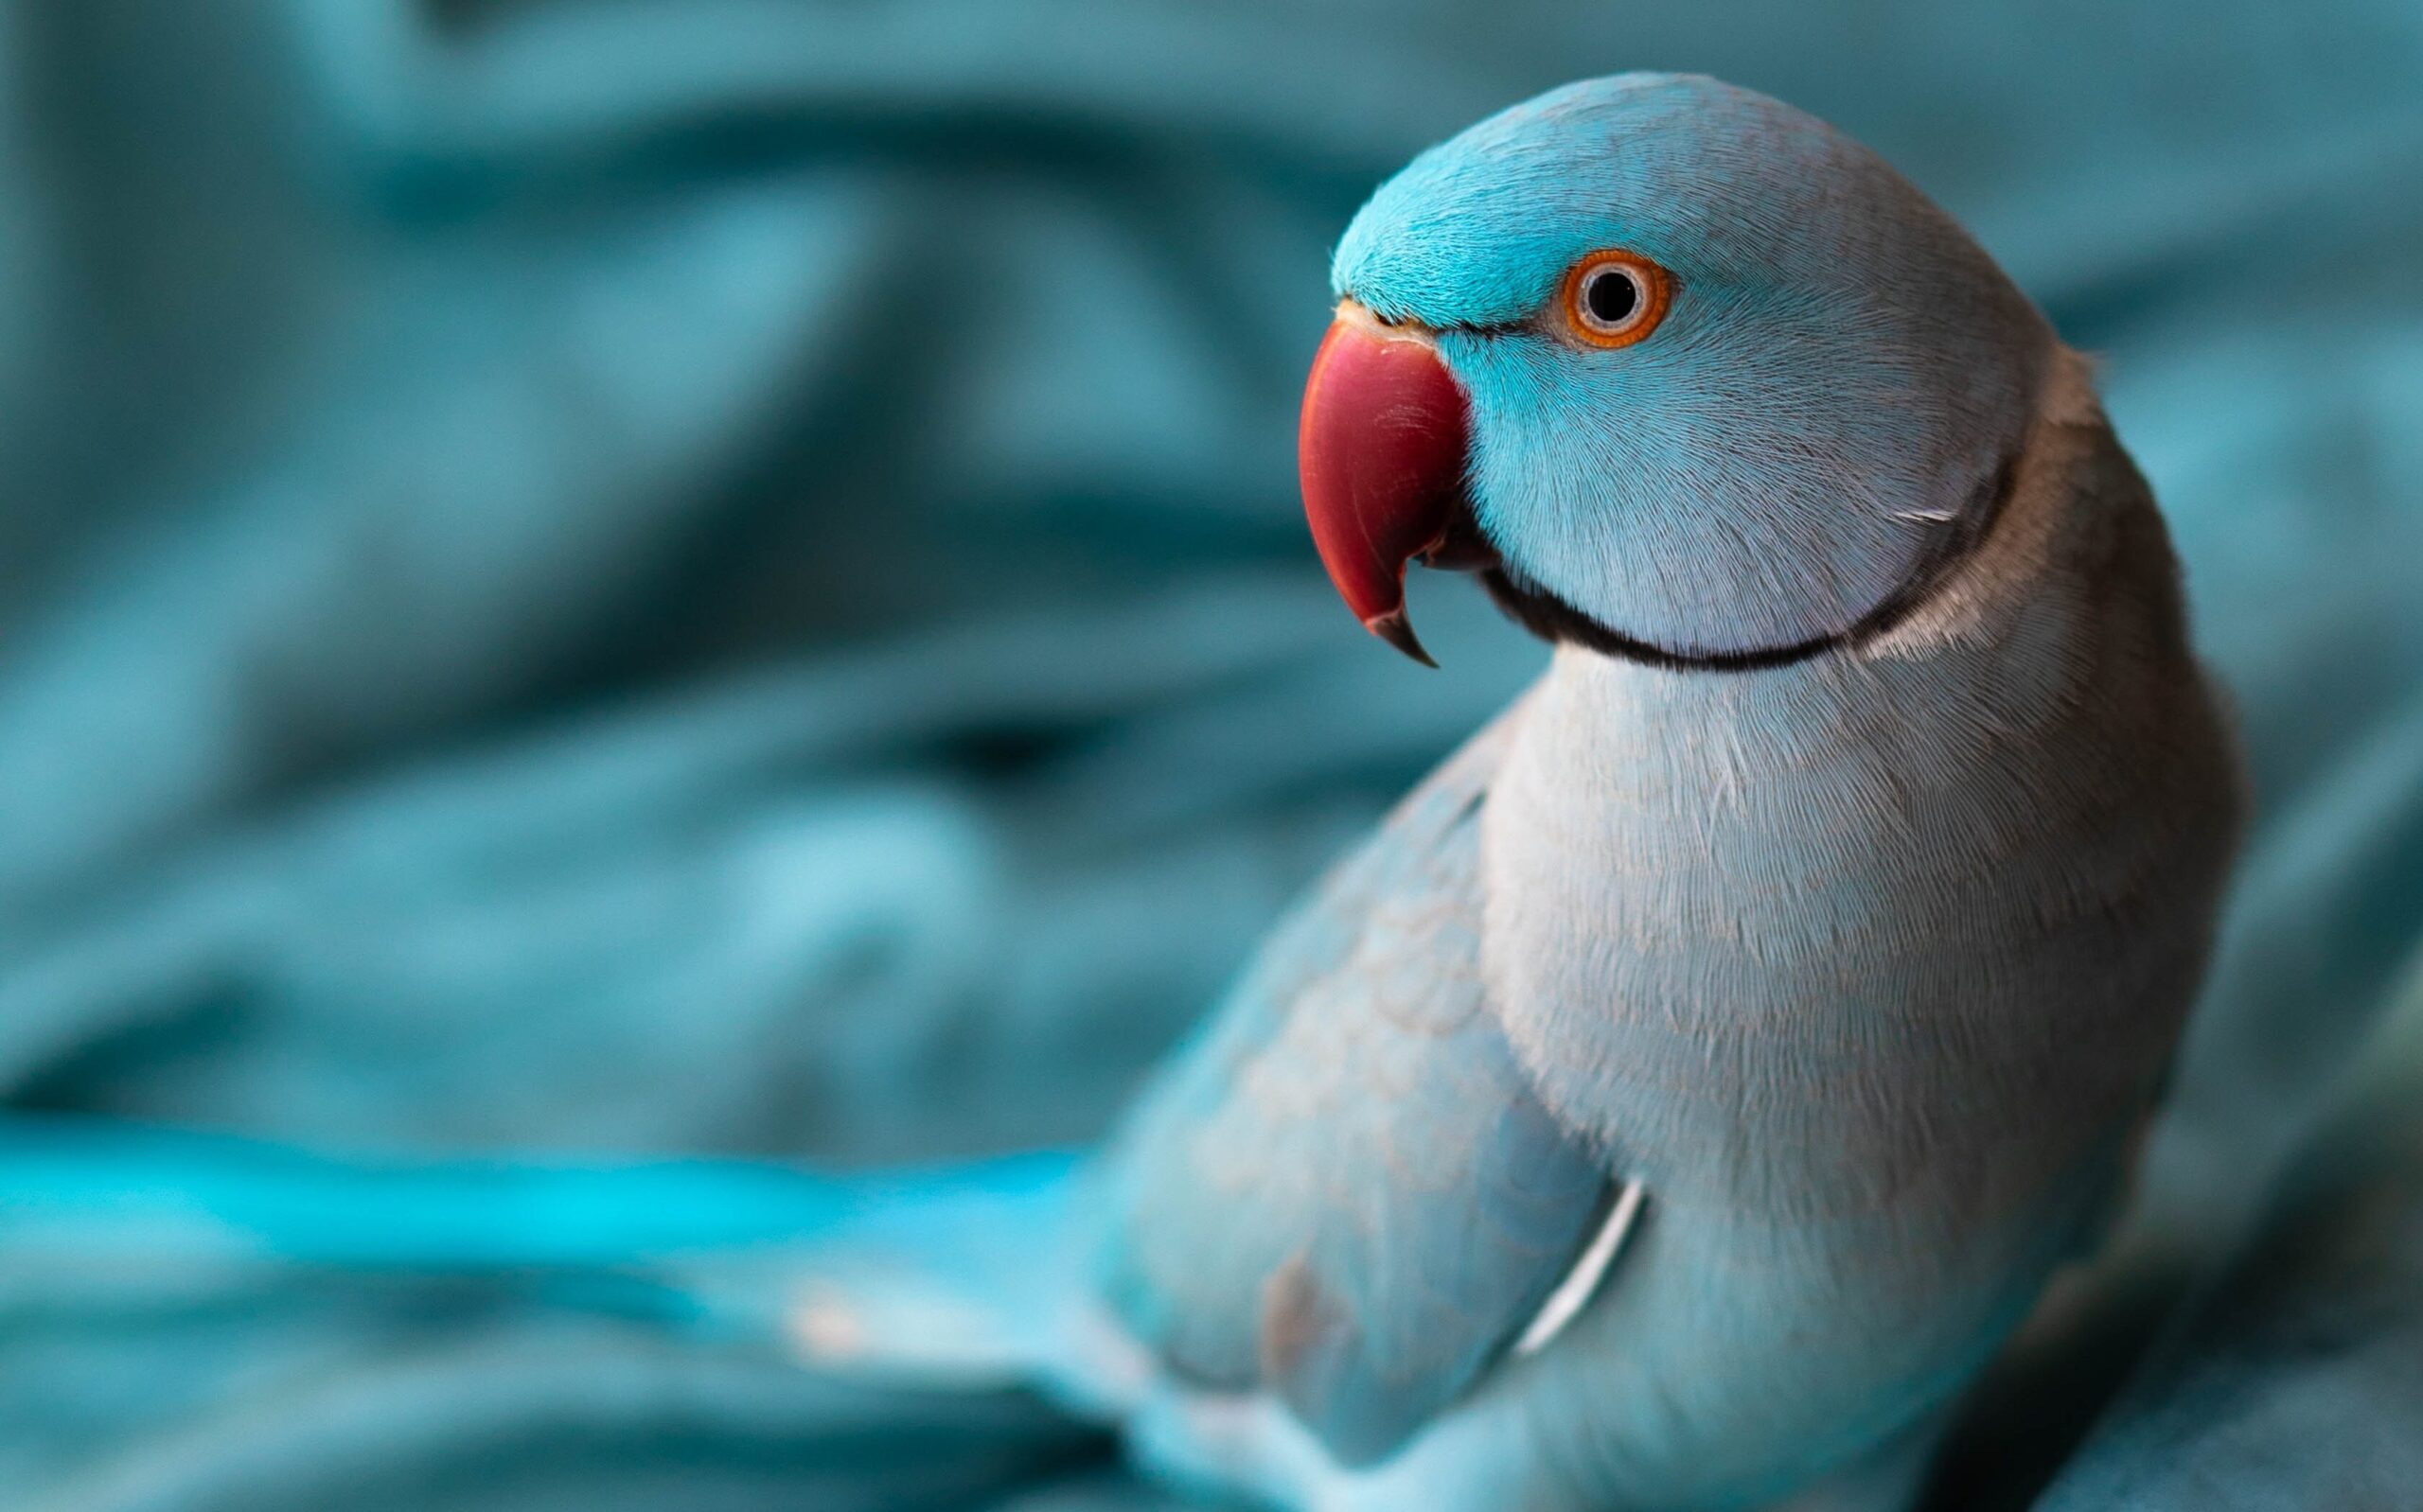 Blue parrot on blue blanket